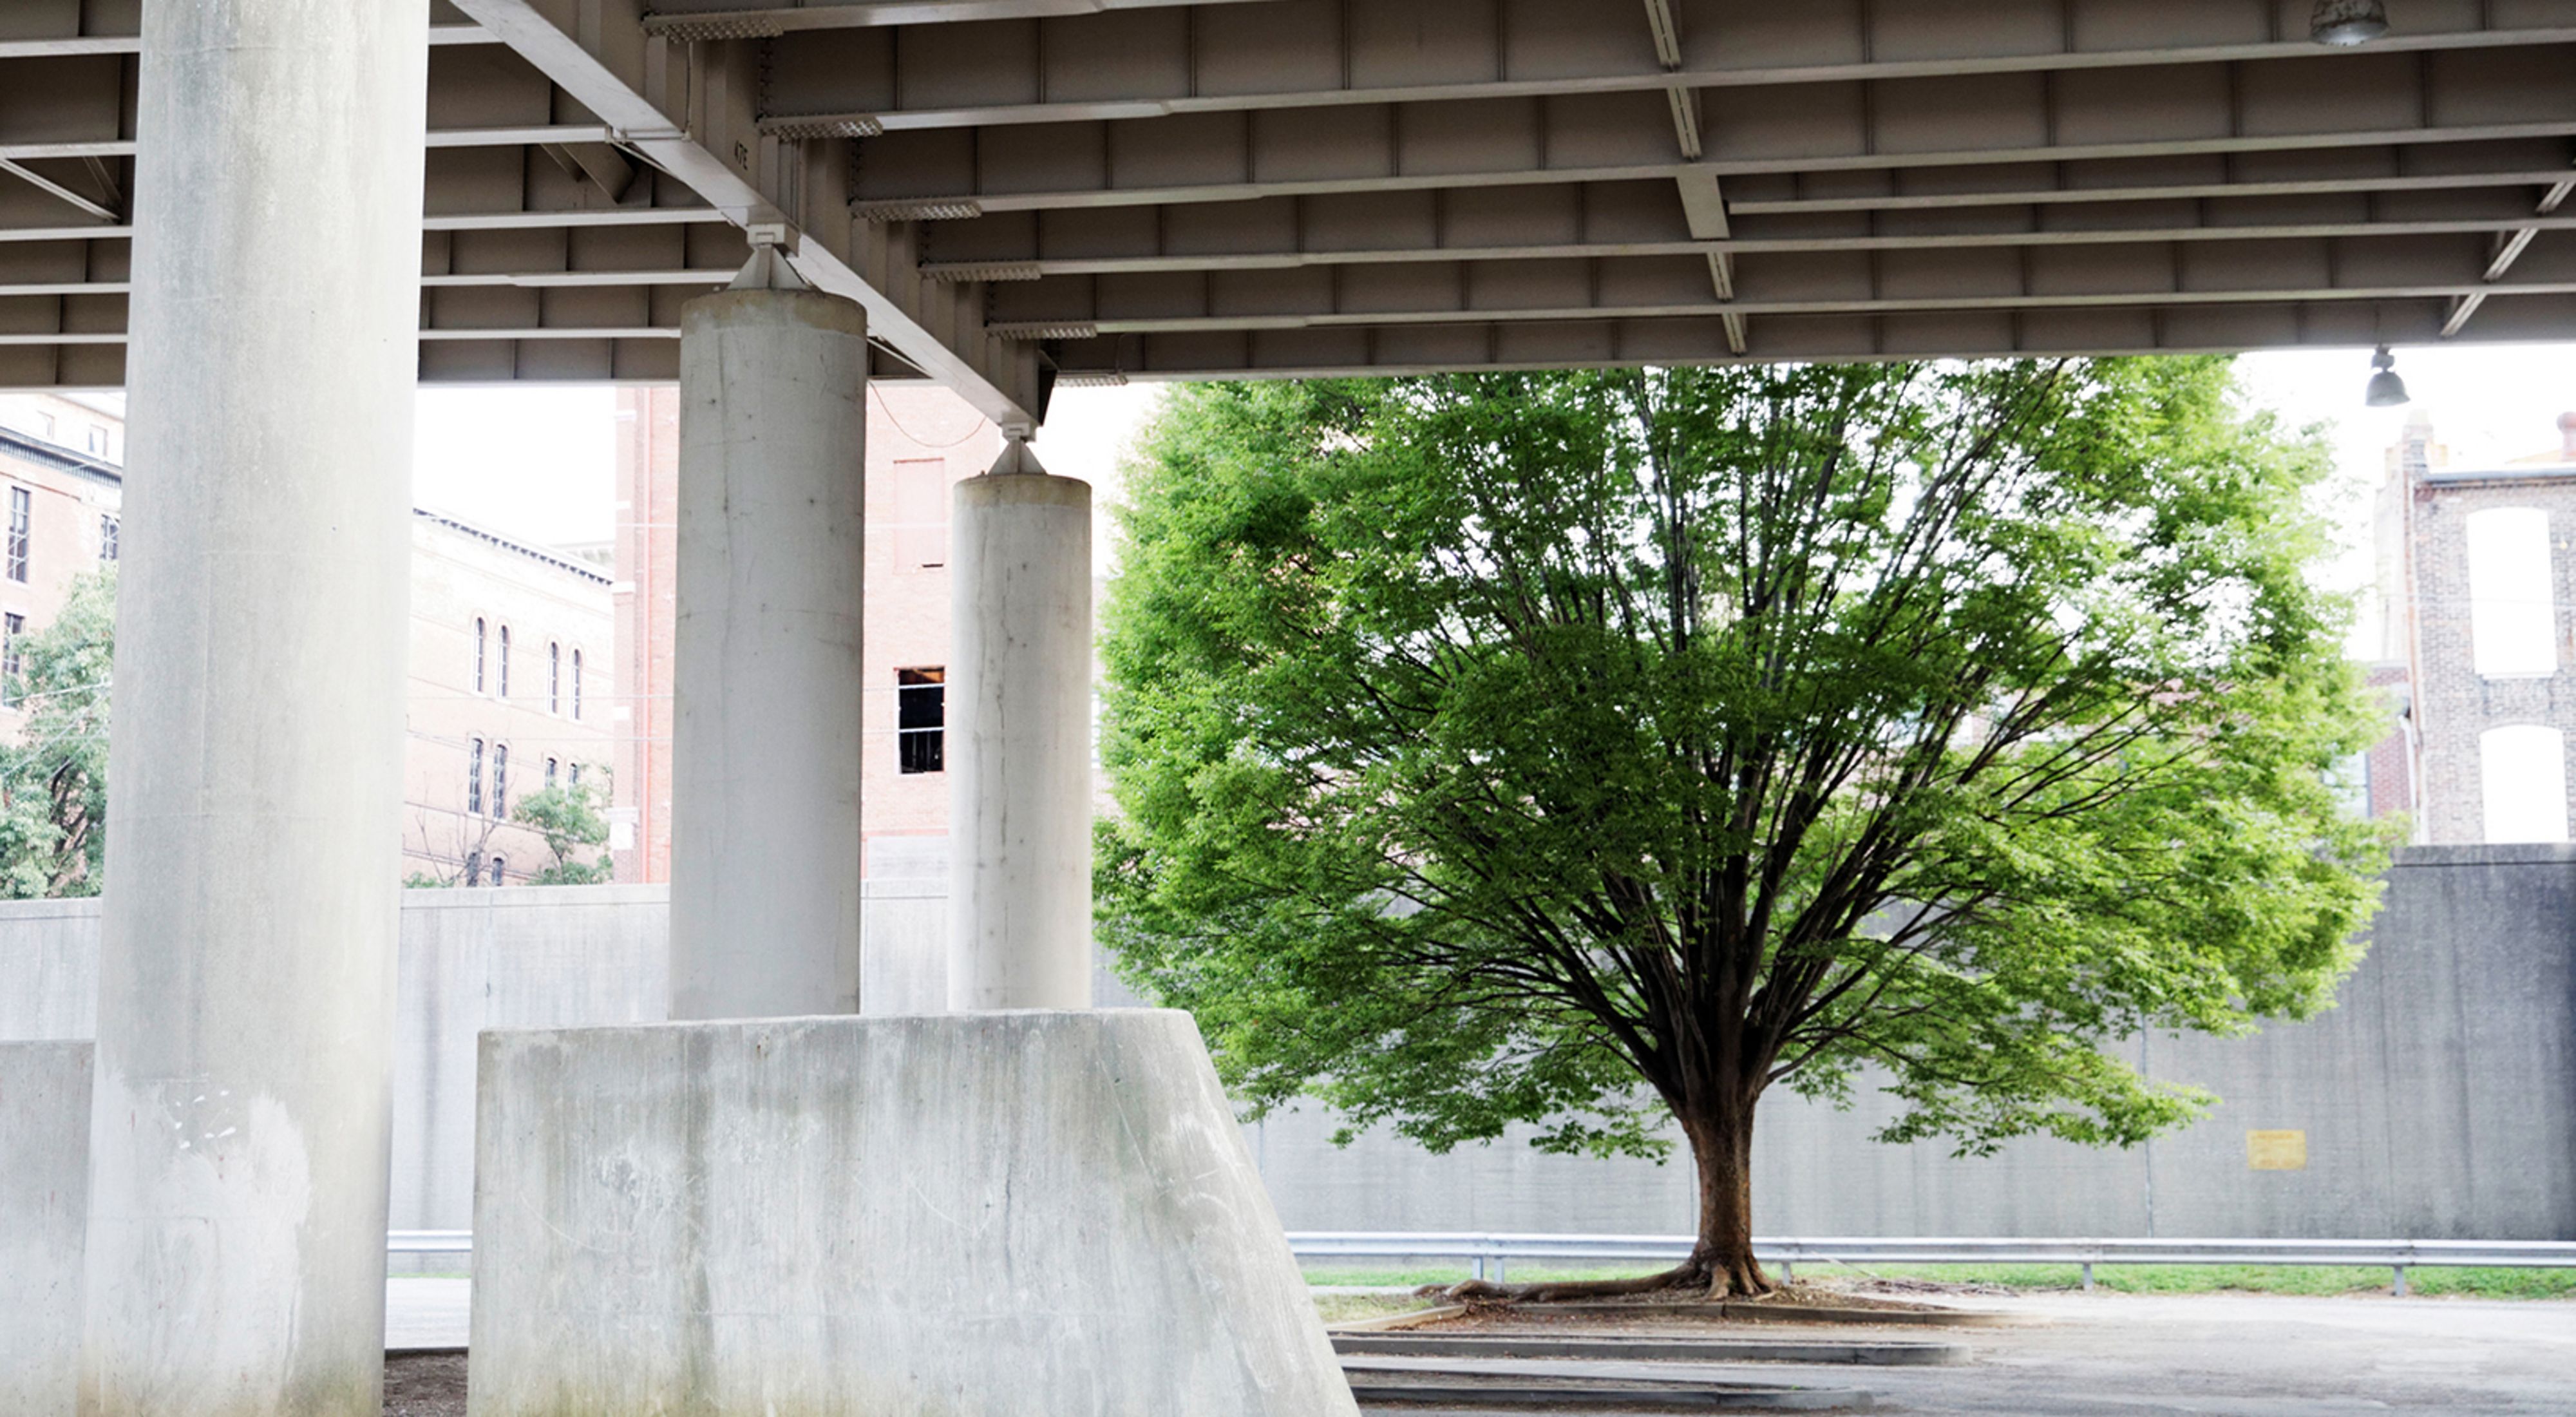 Trees in parking area under Spaghetti Junction, in Louisville, Kentucky.